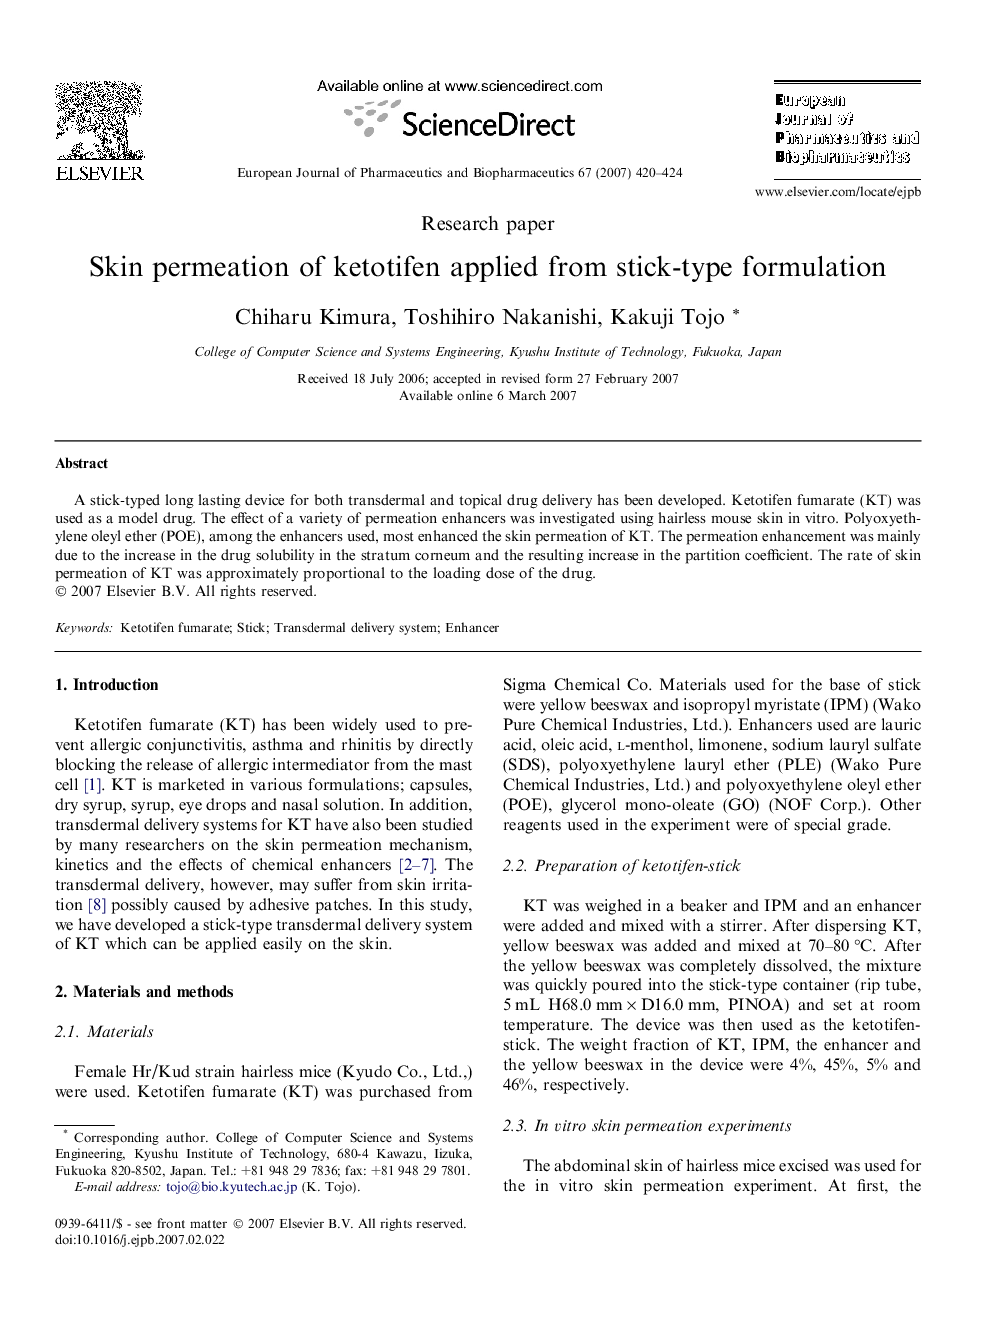 Skin permeation of ketotifen applied from stick-type formulation